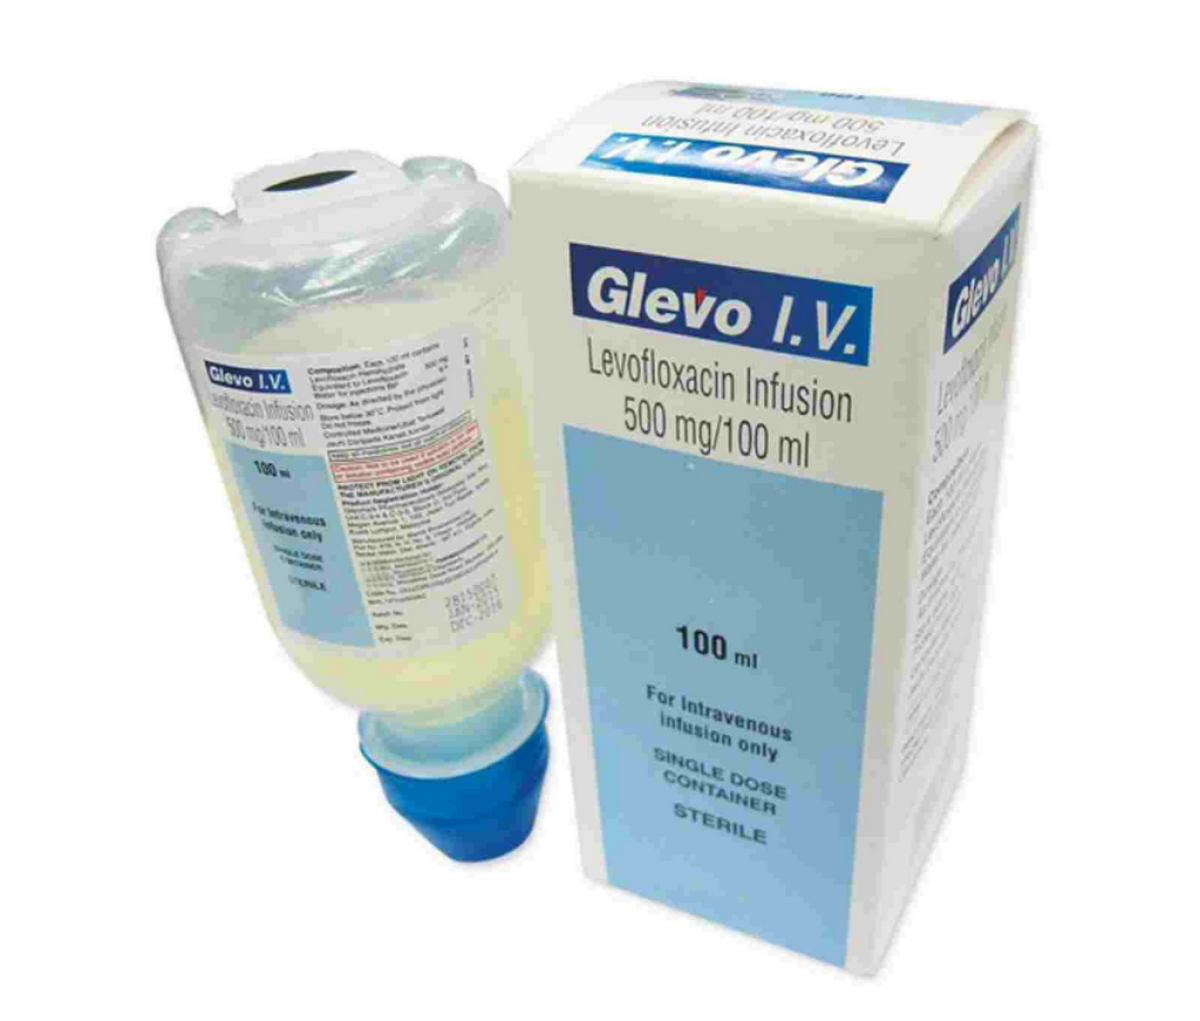 Glevo IV 500mg/100 ml Injection